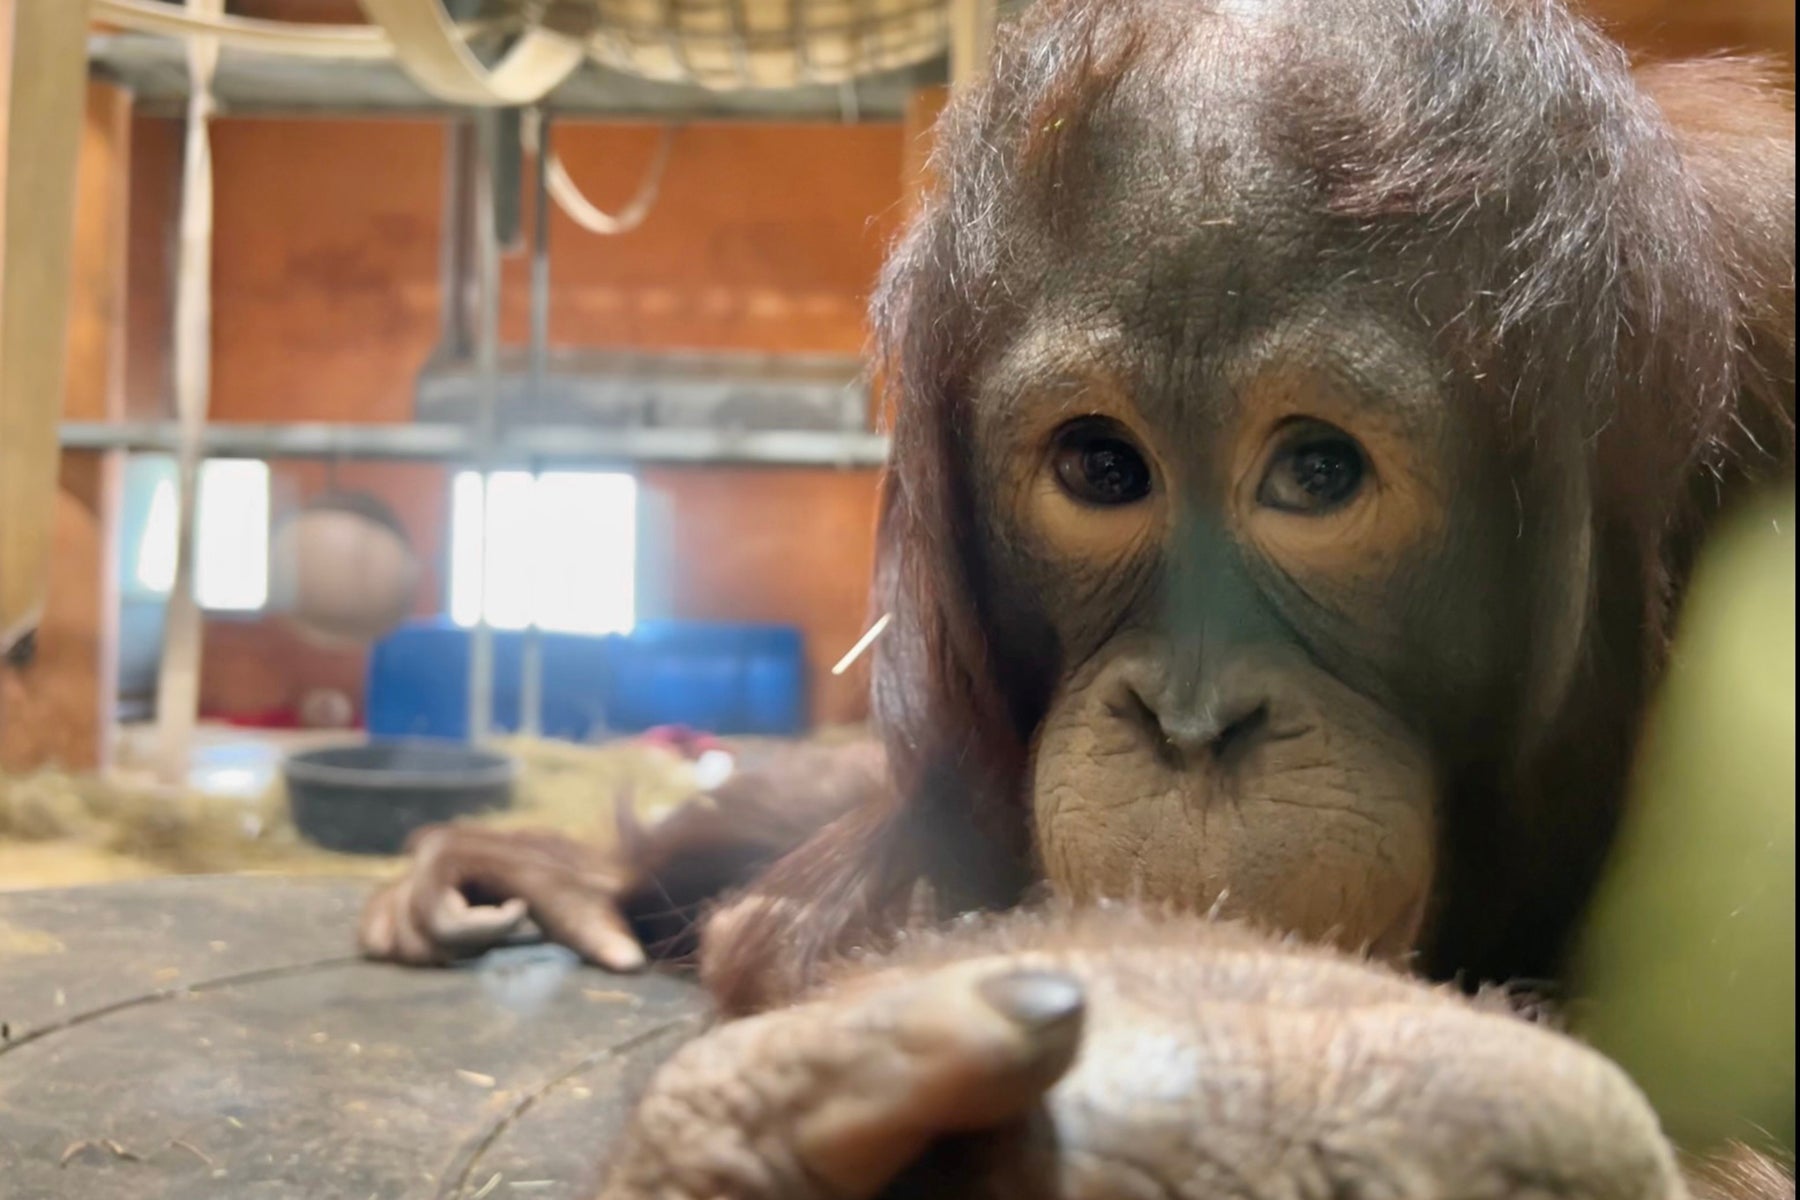 Bornean orangutan Redd in the Think Tank habitat.